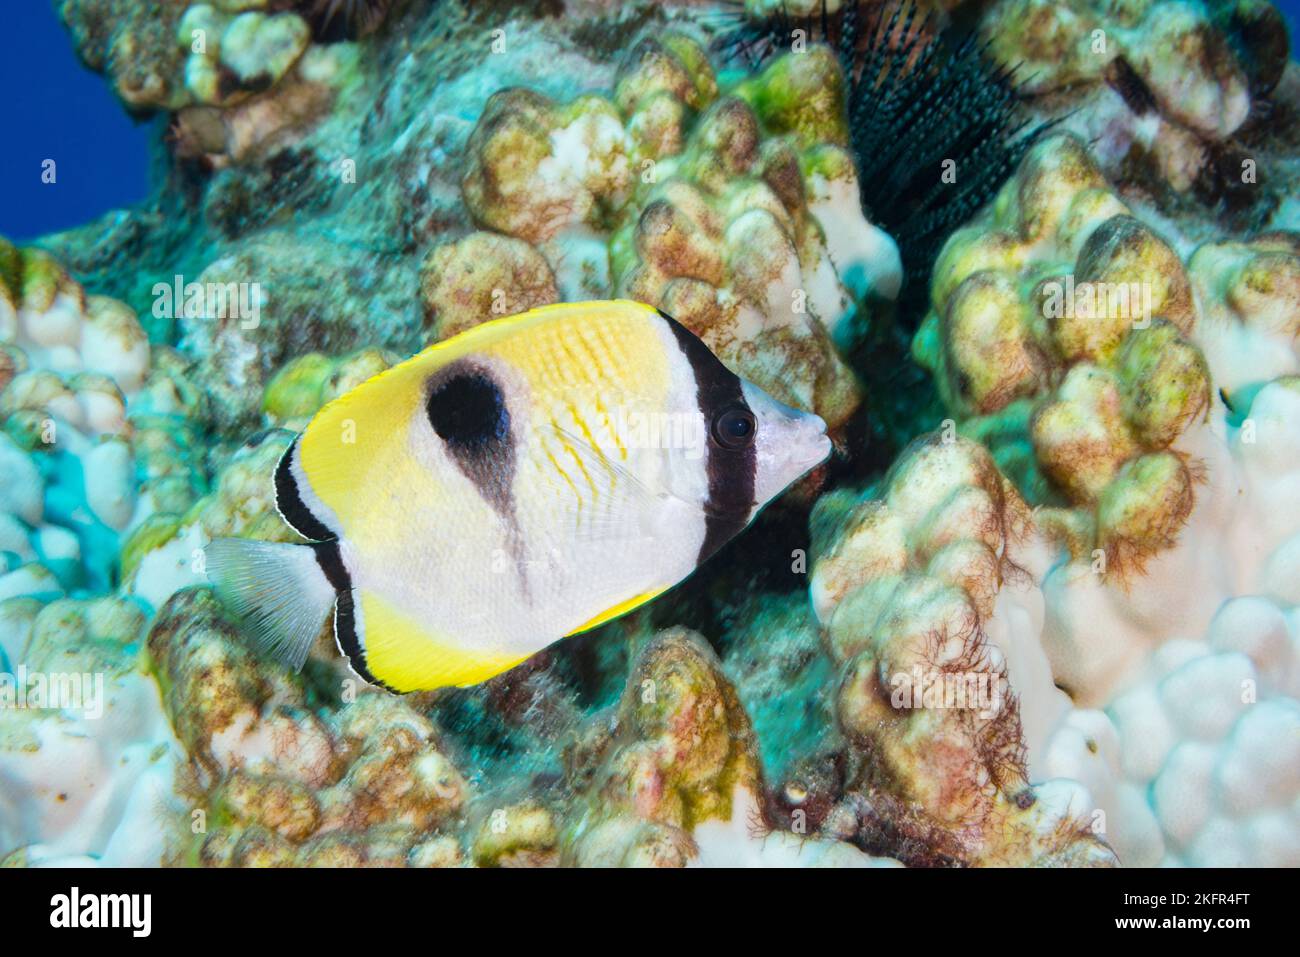 Pesce farfalla lacrima o lauhau, Chaetodon unimaculatus, nuoto su corallo lobo sbiancato, Porites lobata, a seguito di onda di calore marino, Kona, Hawaii Foto Stock